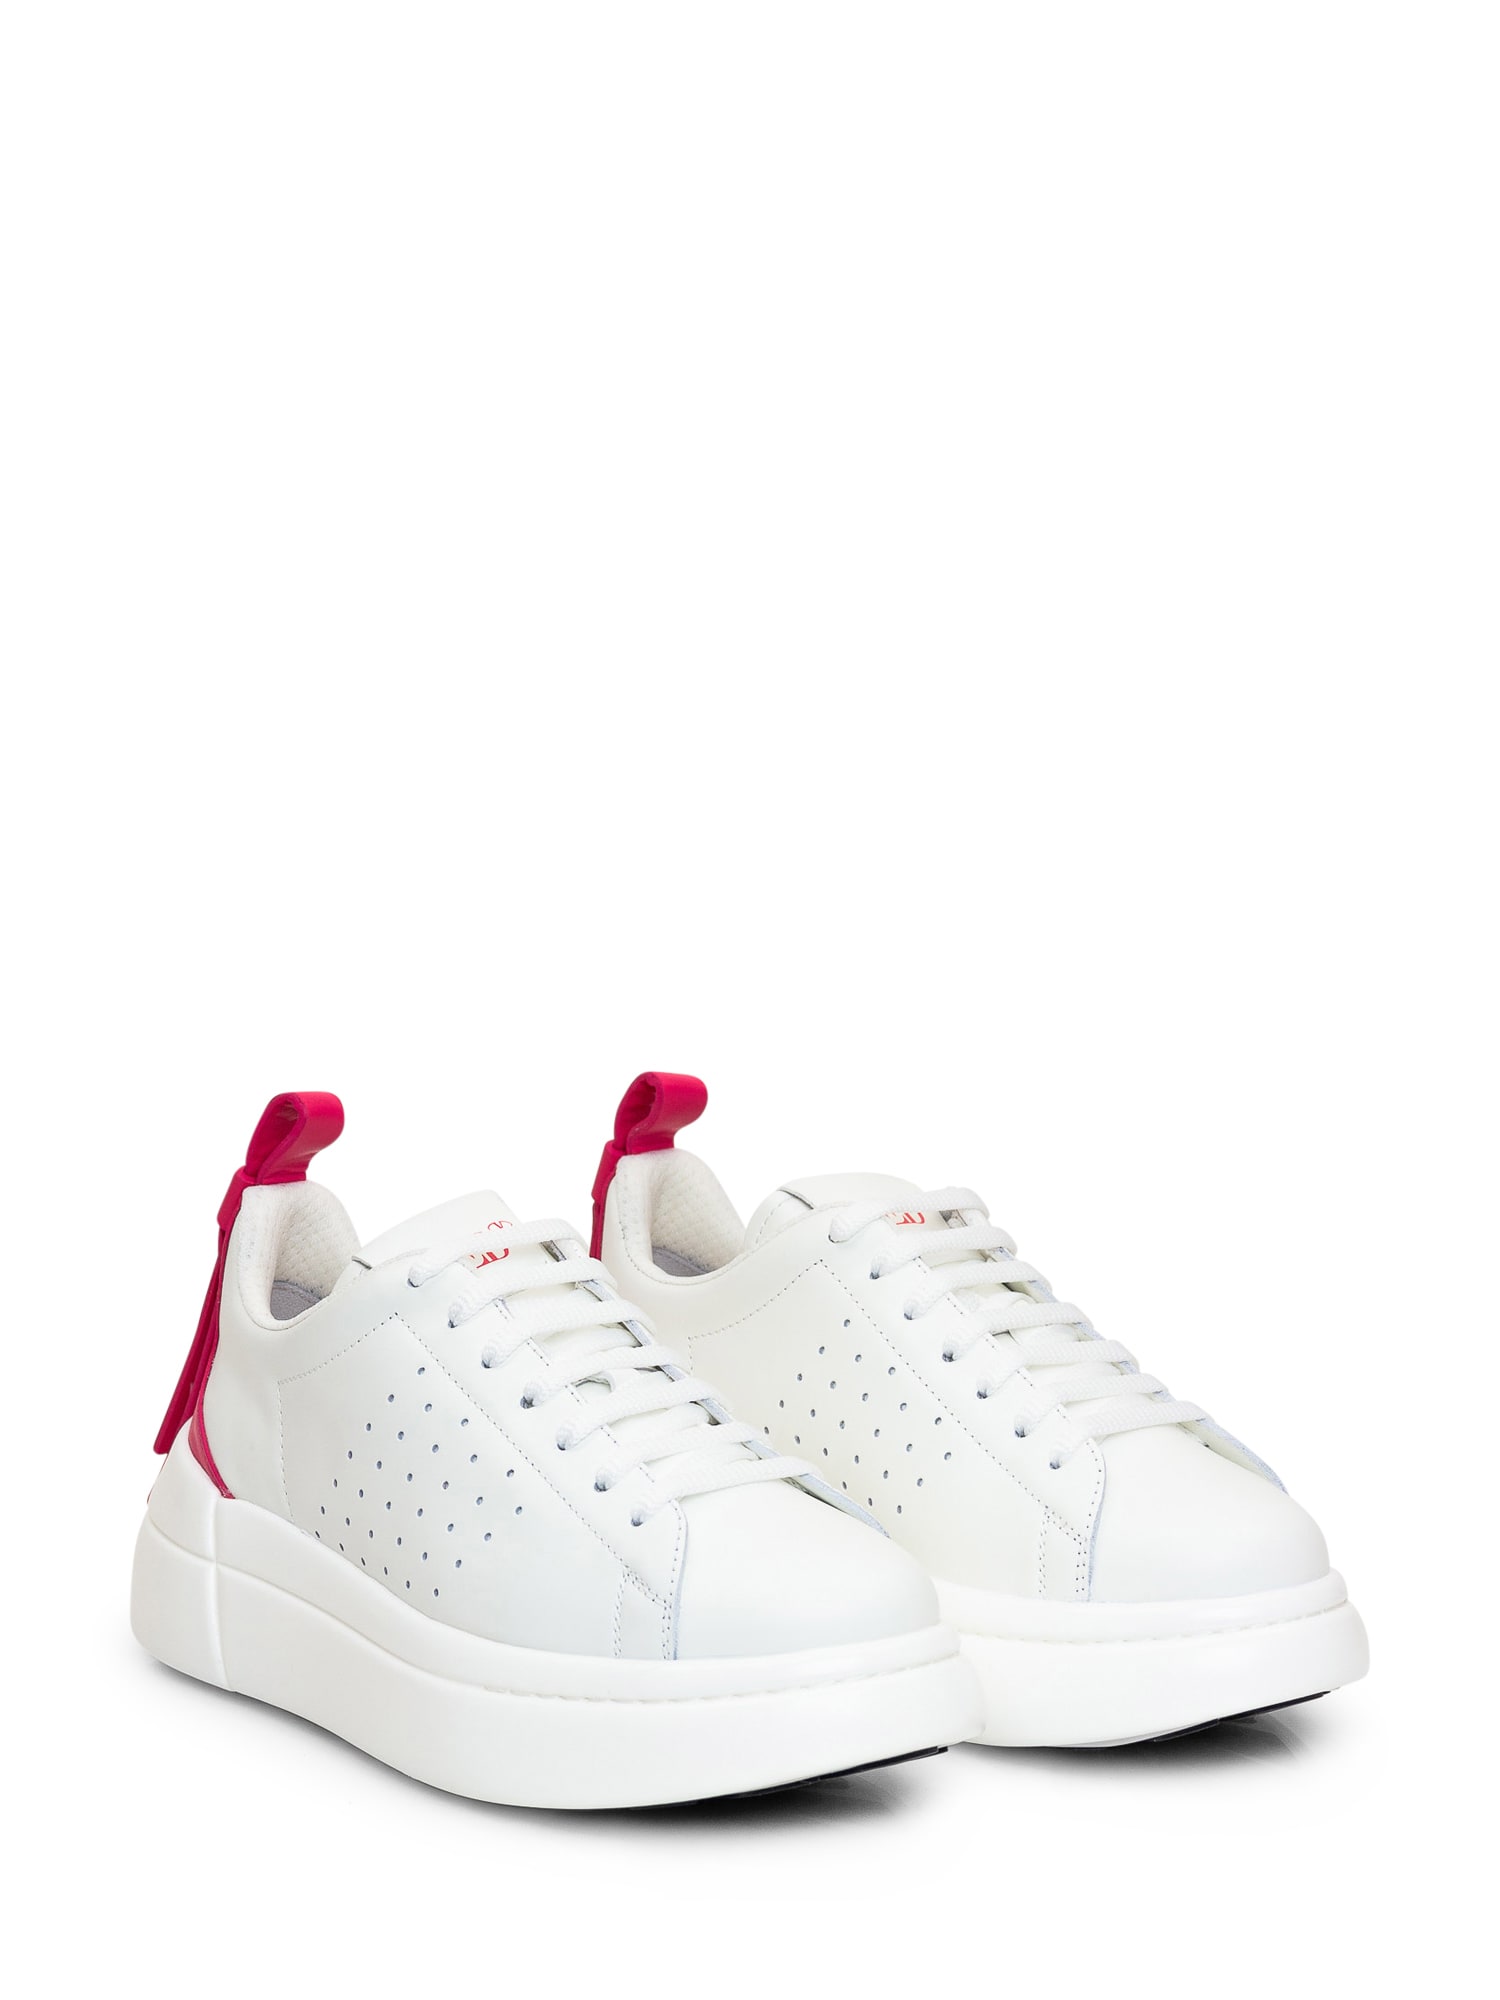 Lui Document vlinder Red Valentino Sneaker With Logo In Bianco/azalea/bianco | ModeSens